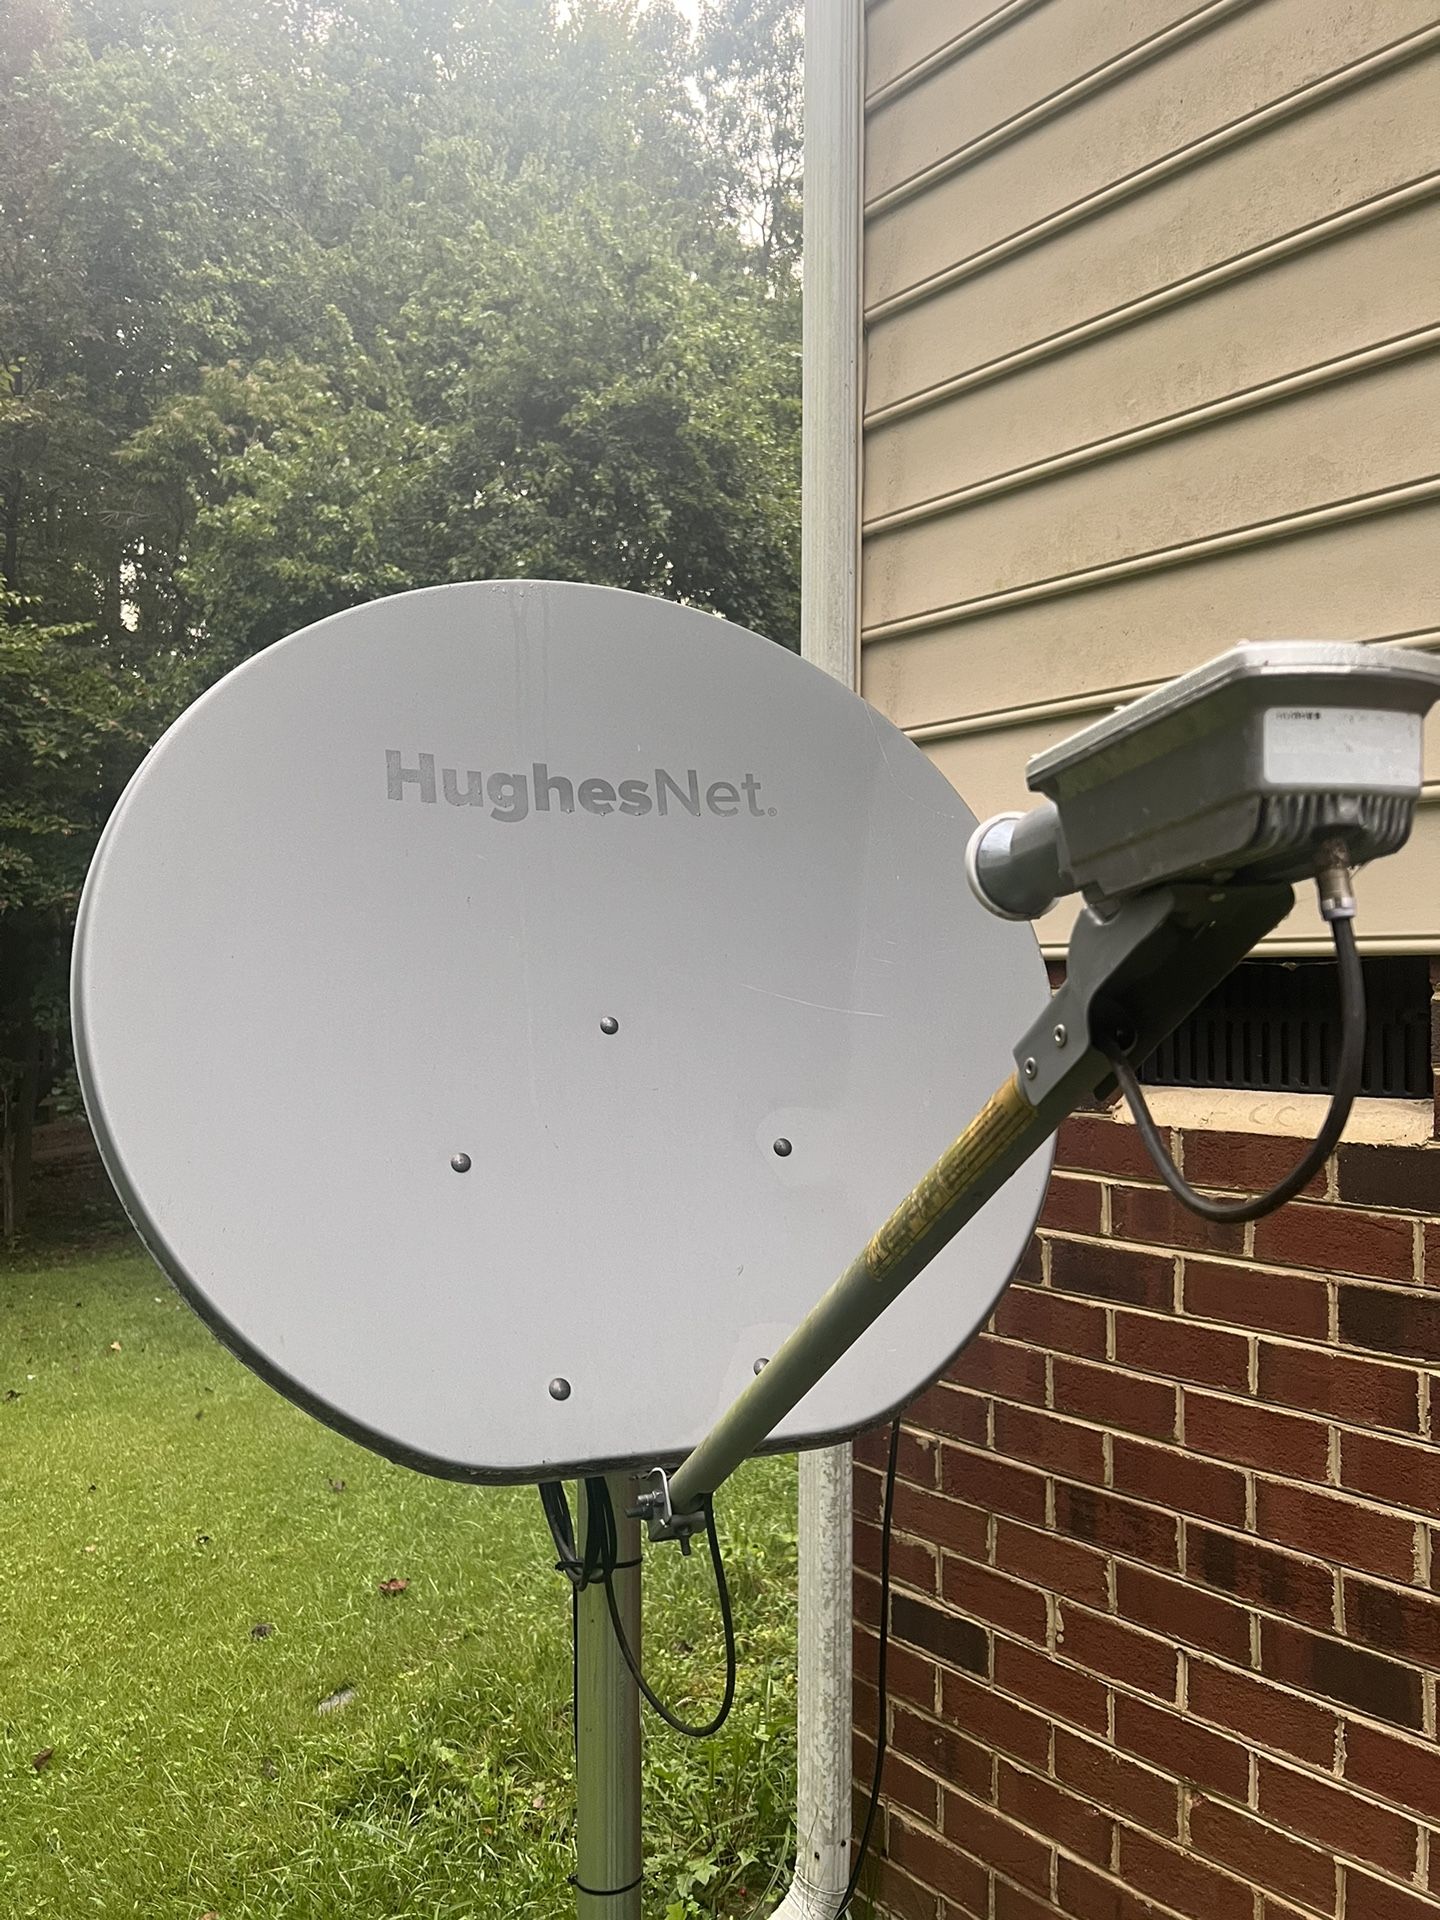 Hughes Net Satellite And Modem 